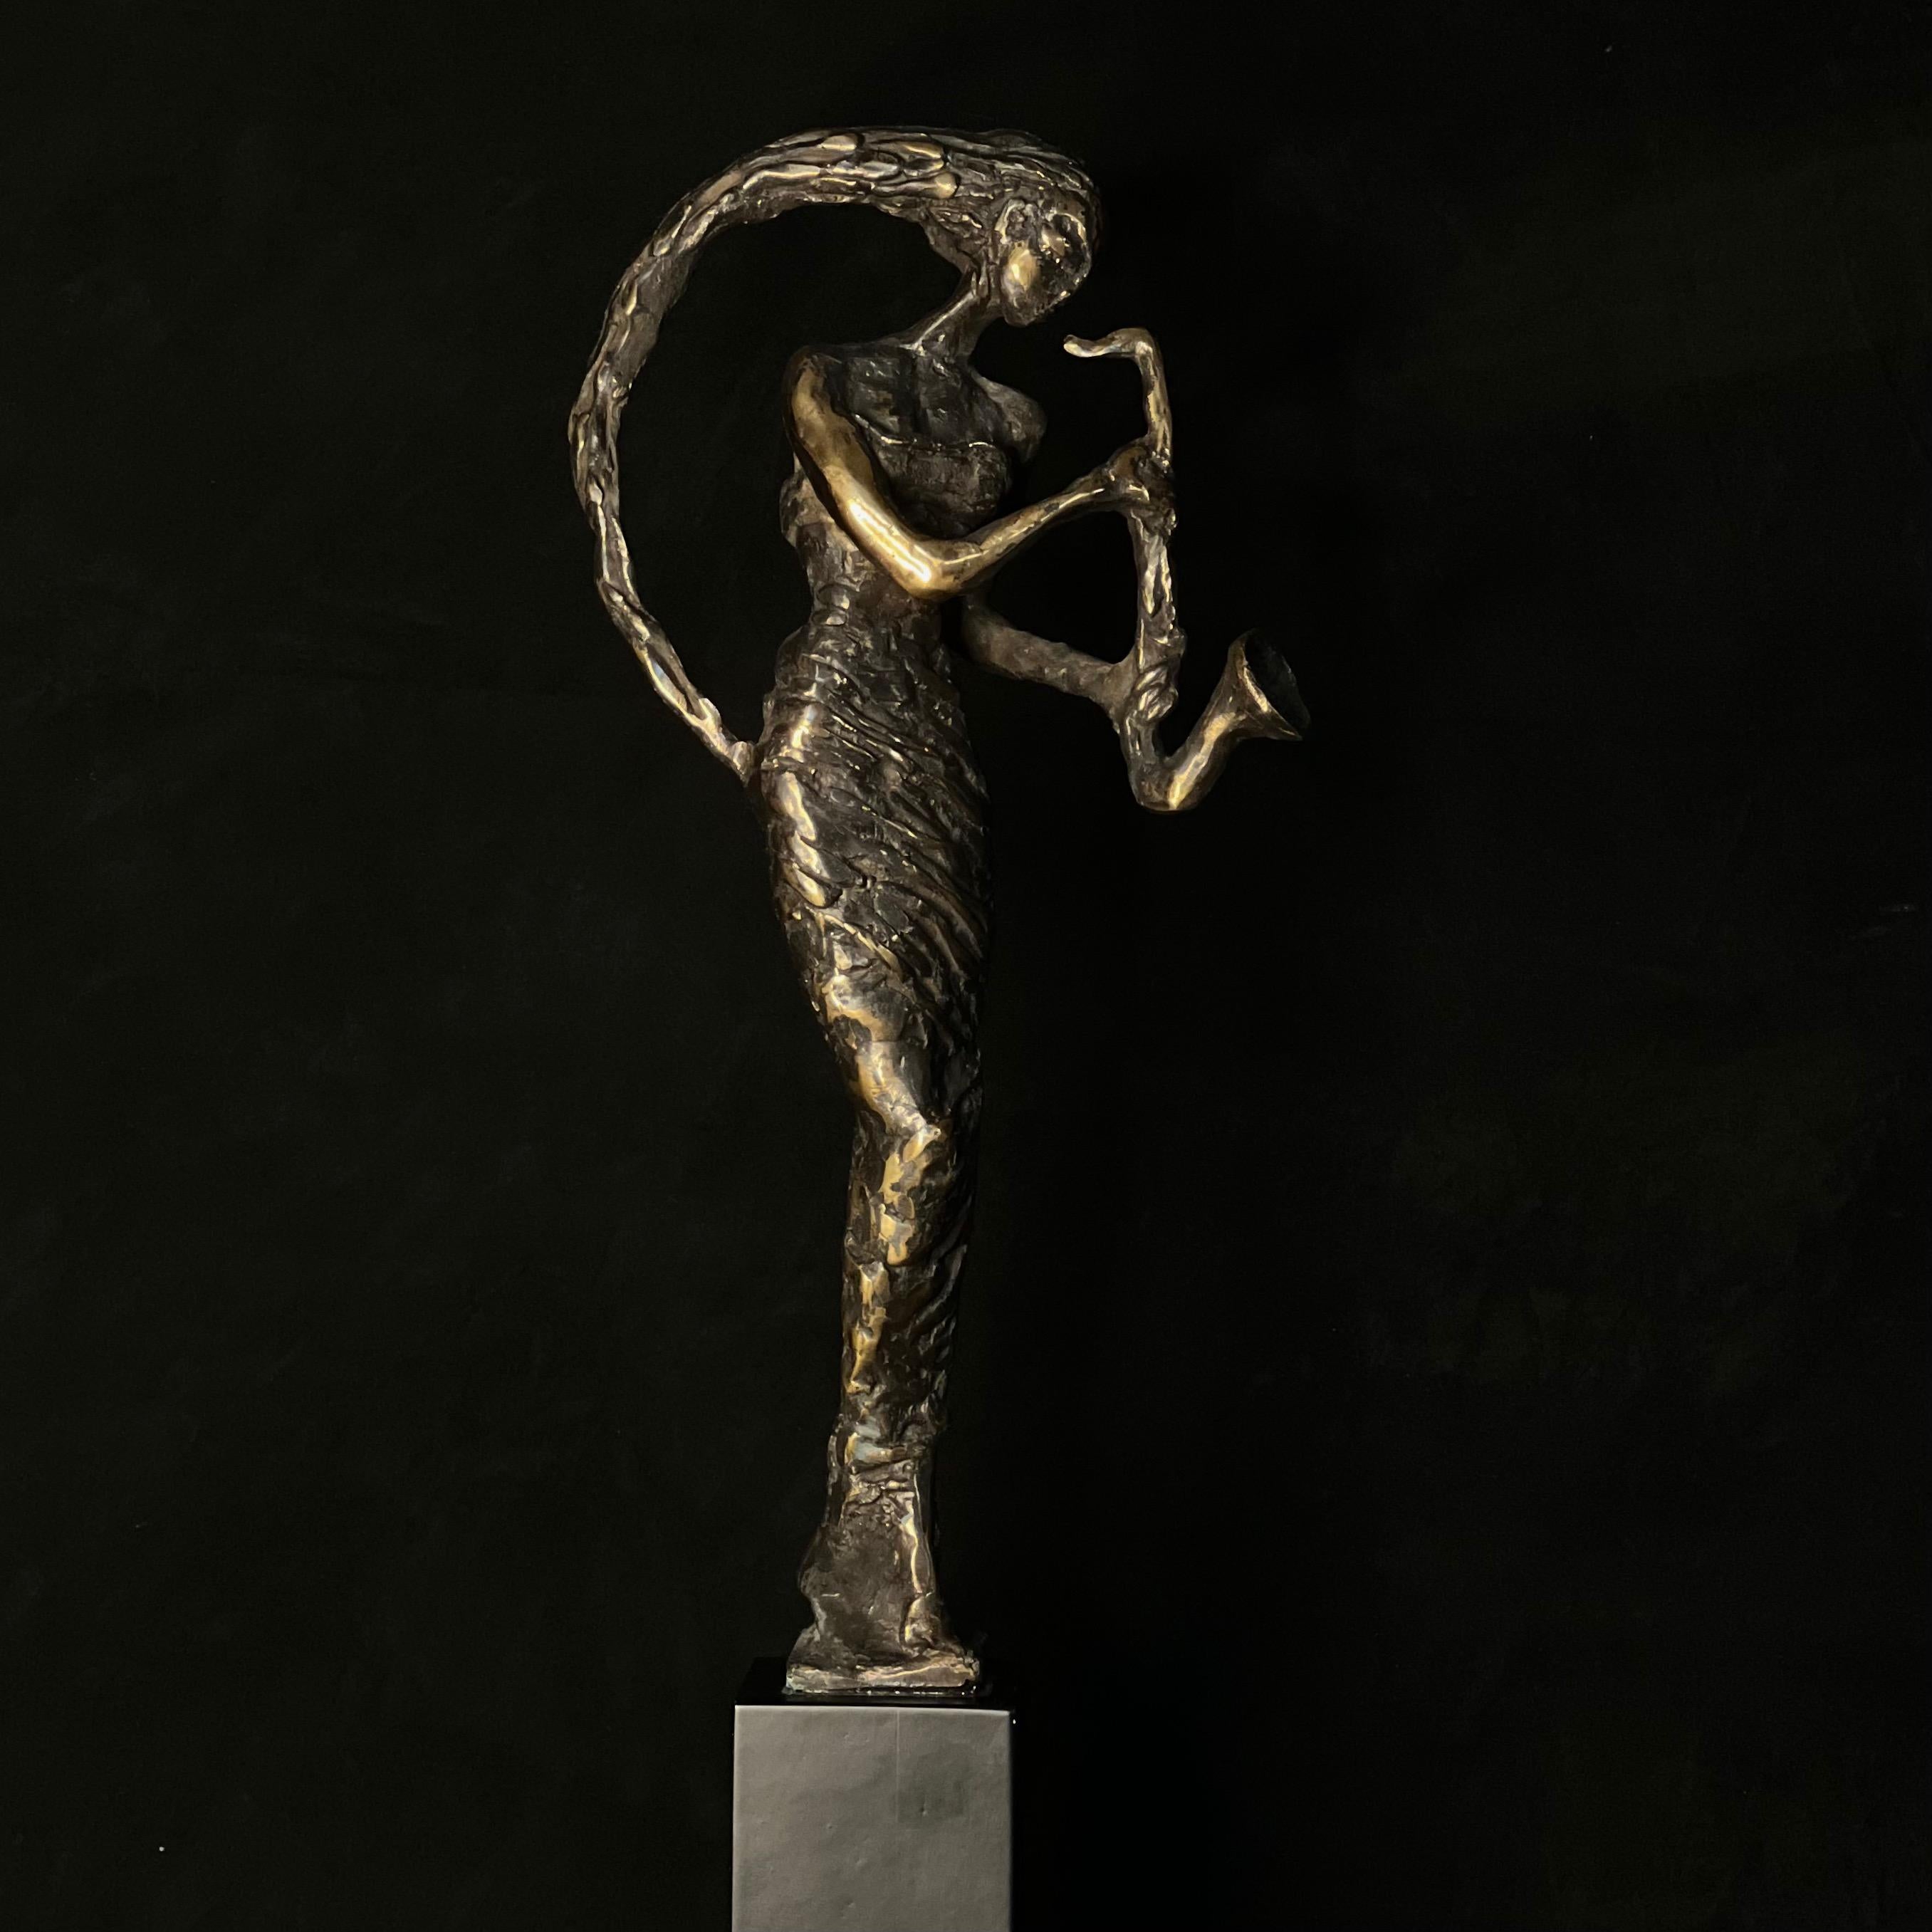 tauno kangro Figurative Sculpture - The flutist - flute bronze music sculpture by Tauno Kangro